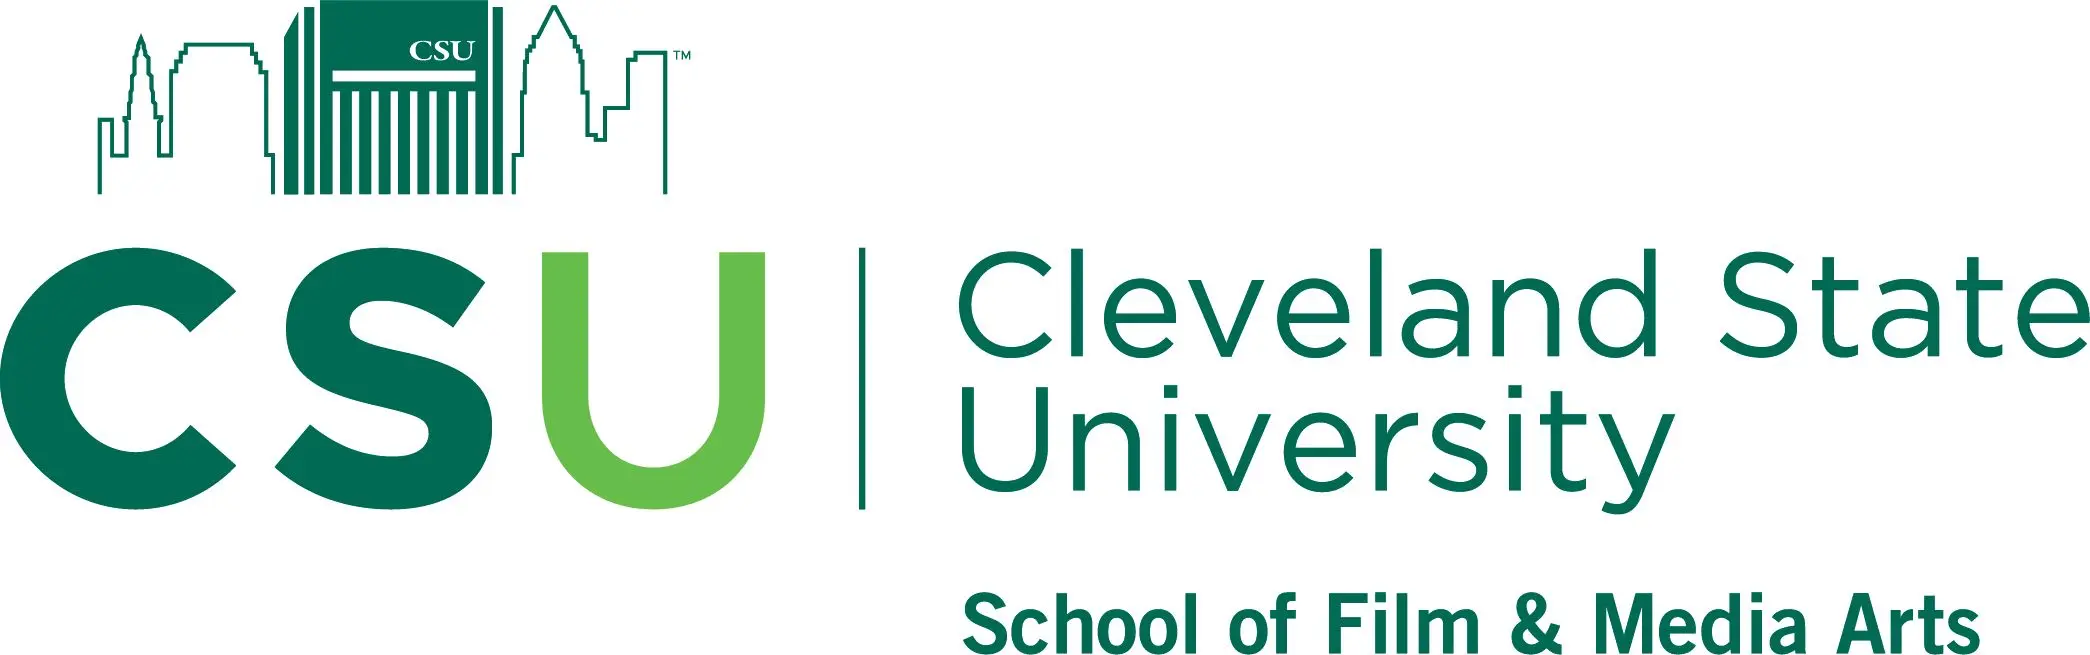 Cleveland State University - School of Film & Media Arts